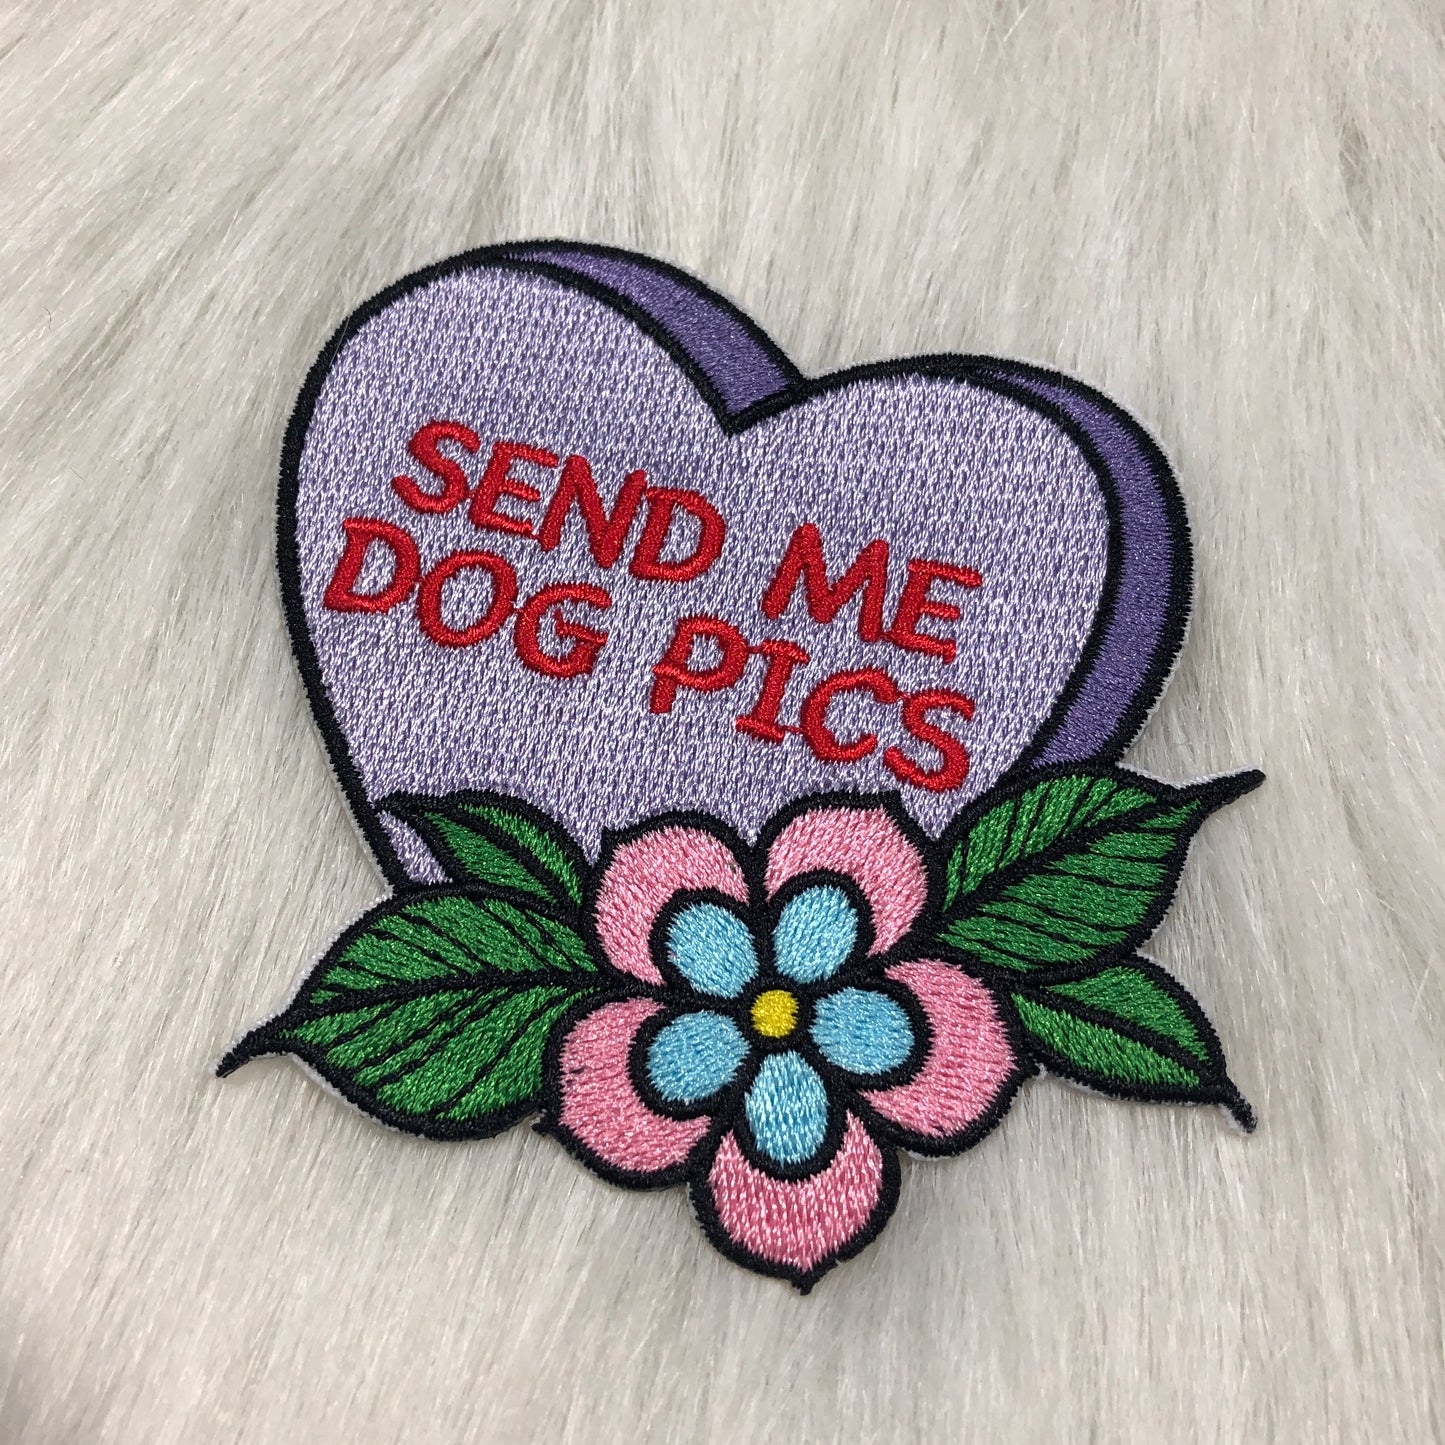 Send Me Dog Pics - Patch